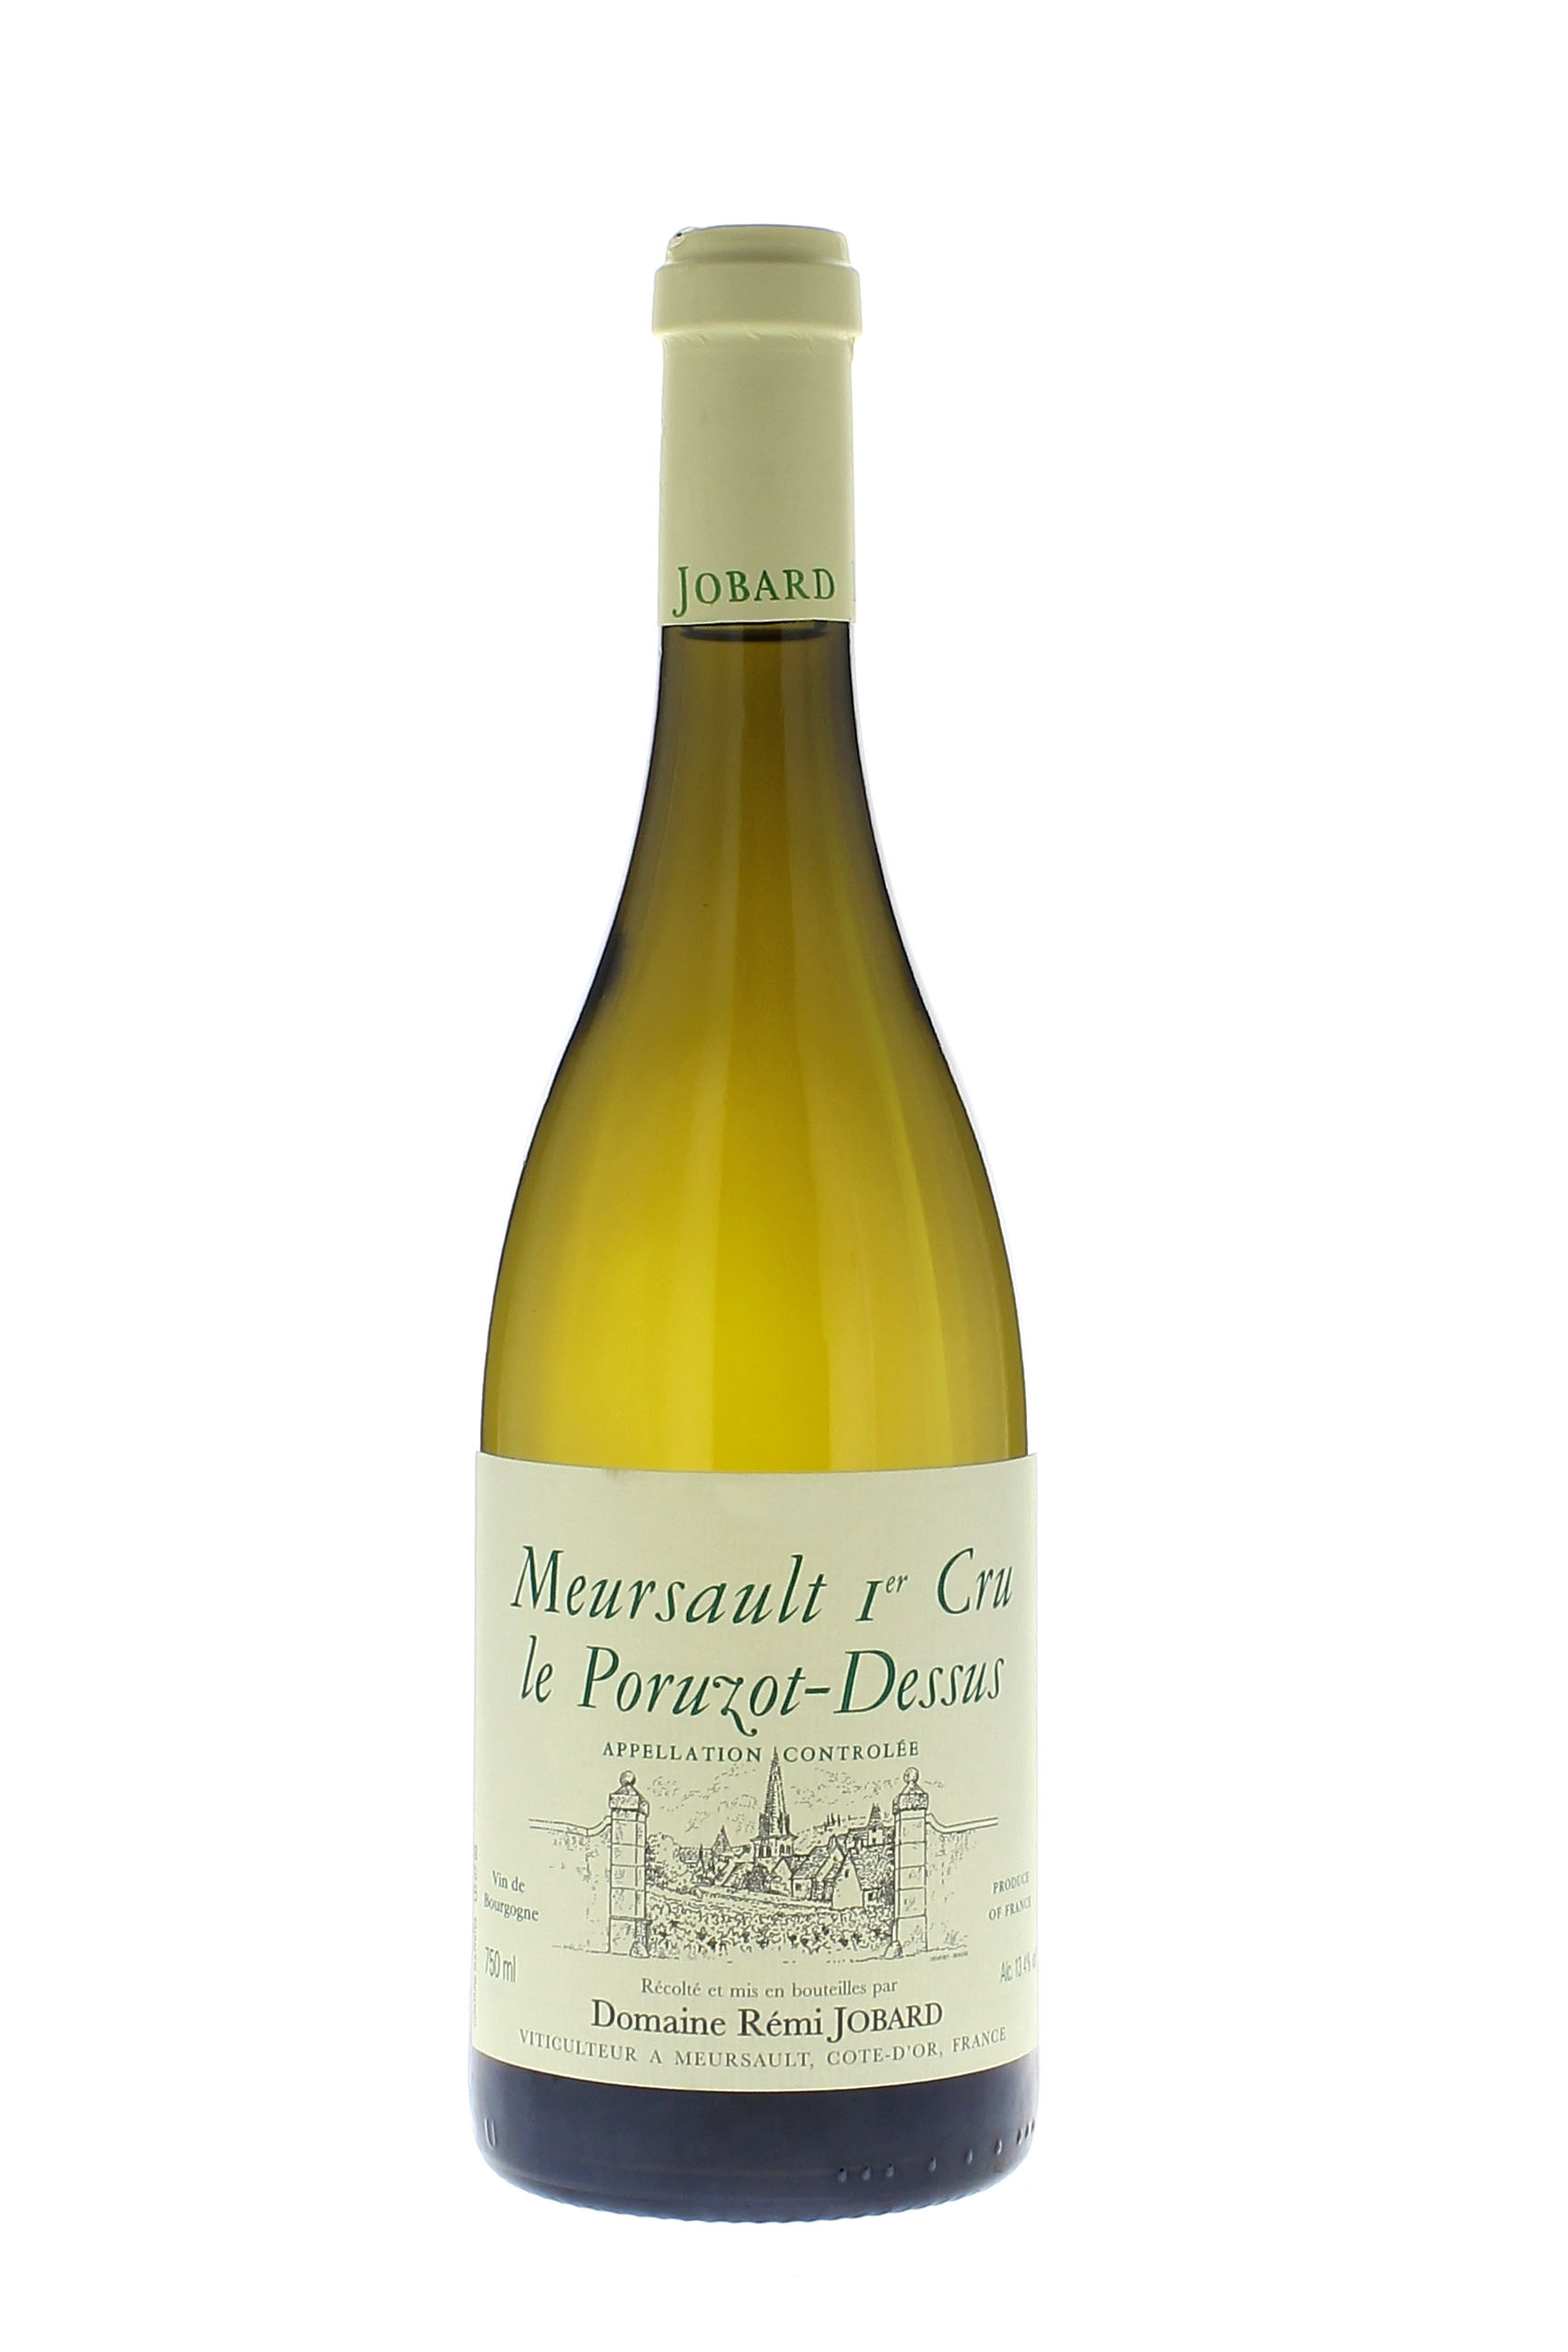 Meursault 1er cru poruzots 2013 Domaine JOBARD, Bourgogne blanc